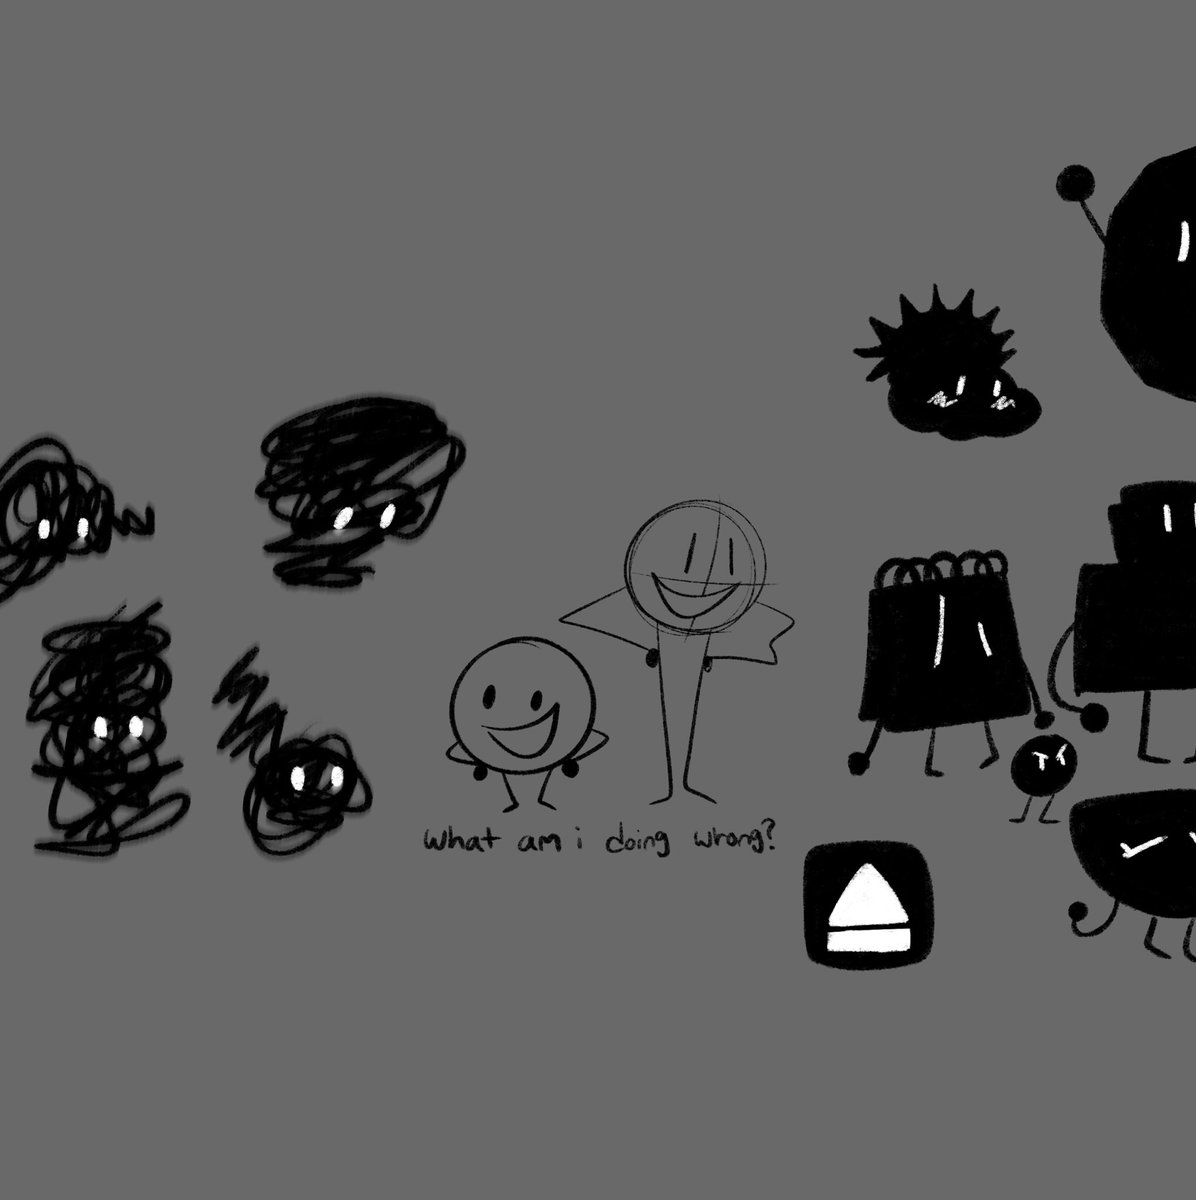 okay chat animatic angst how we feeling #animaticbattle #animaticosc #osc #objectshow #objectshowcommunity